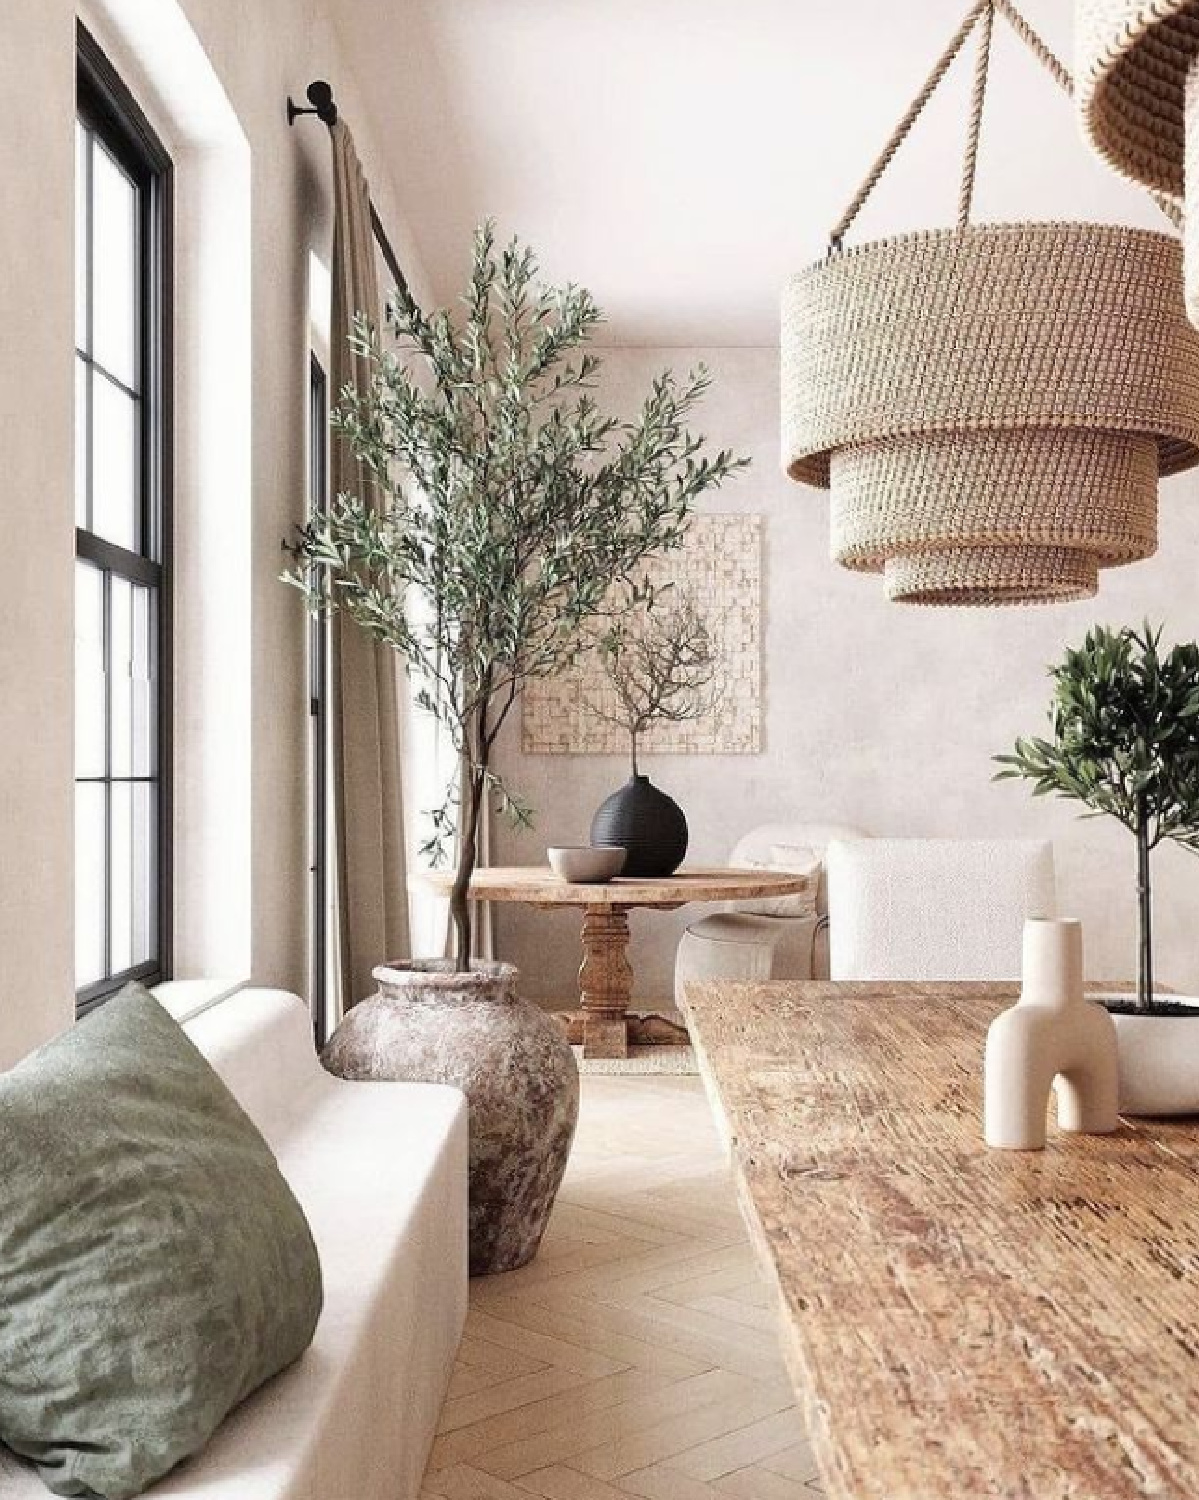 Serene, organic, neutral minimal modern European interior with woven pendant and potted tree - @arbitare_studio.